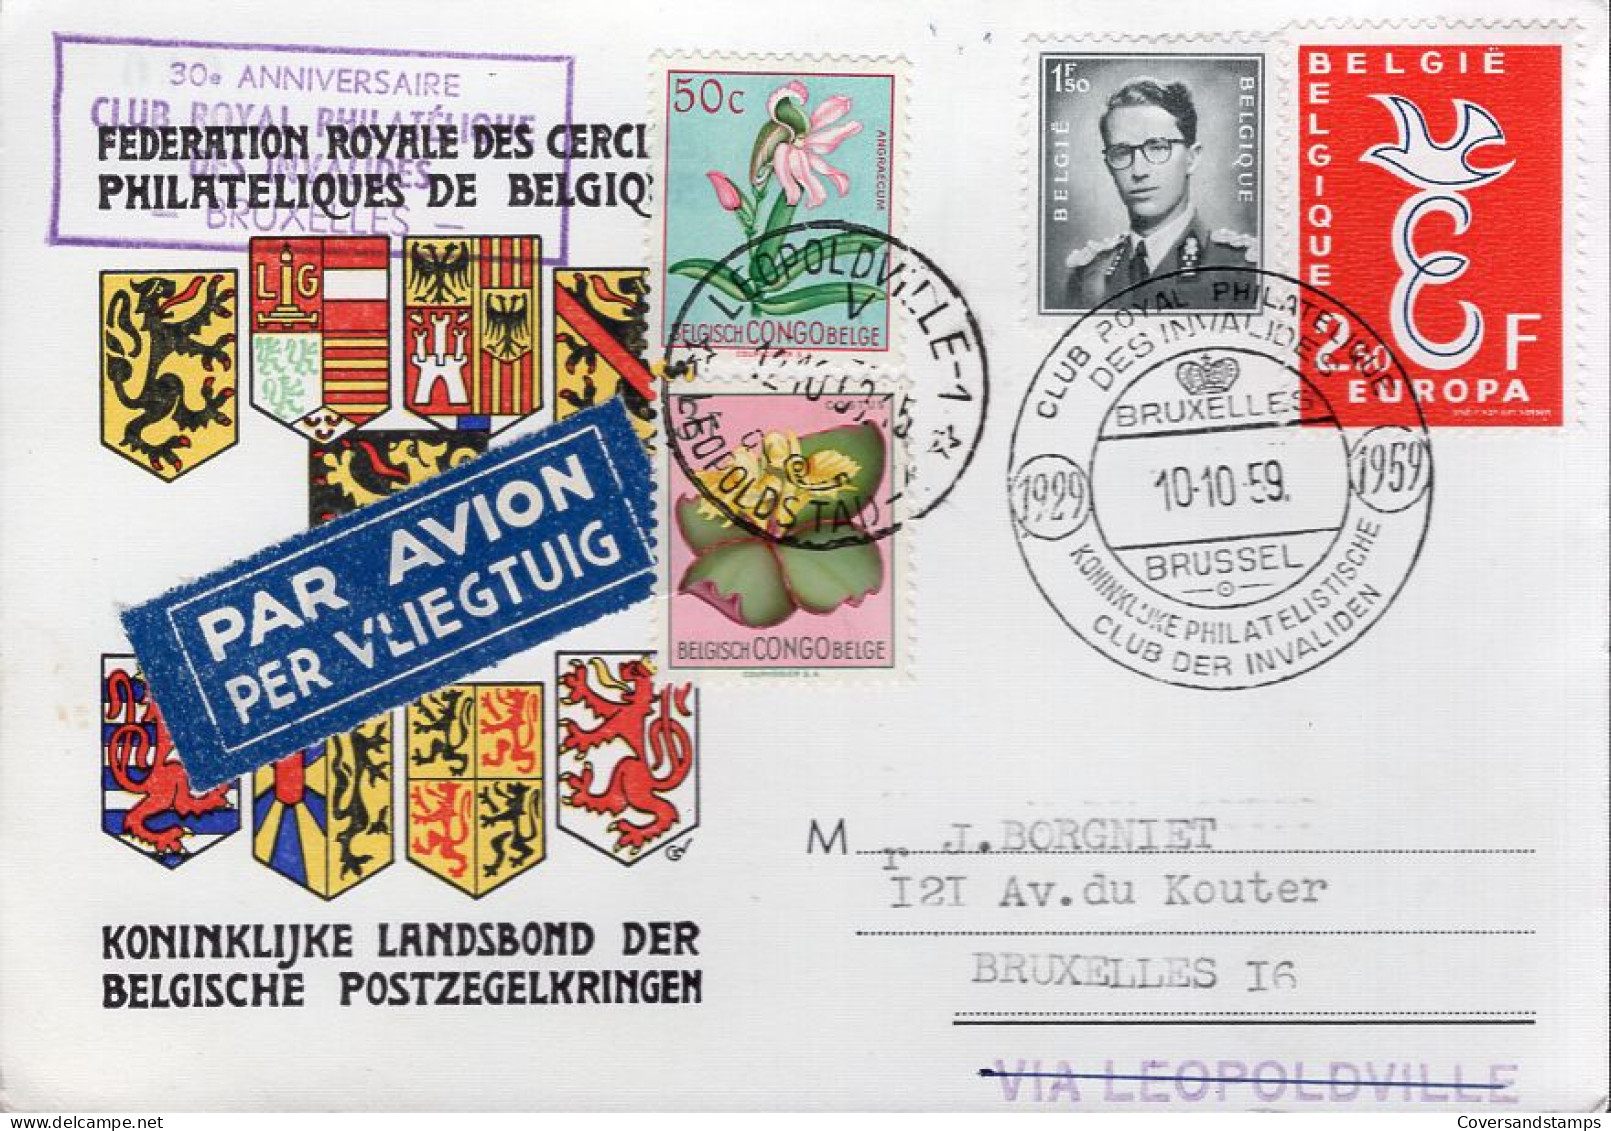  Briefkaart: 30e Anniversaire Club Royal Philatélique Des Invalides - Briefe U. Dokumente